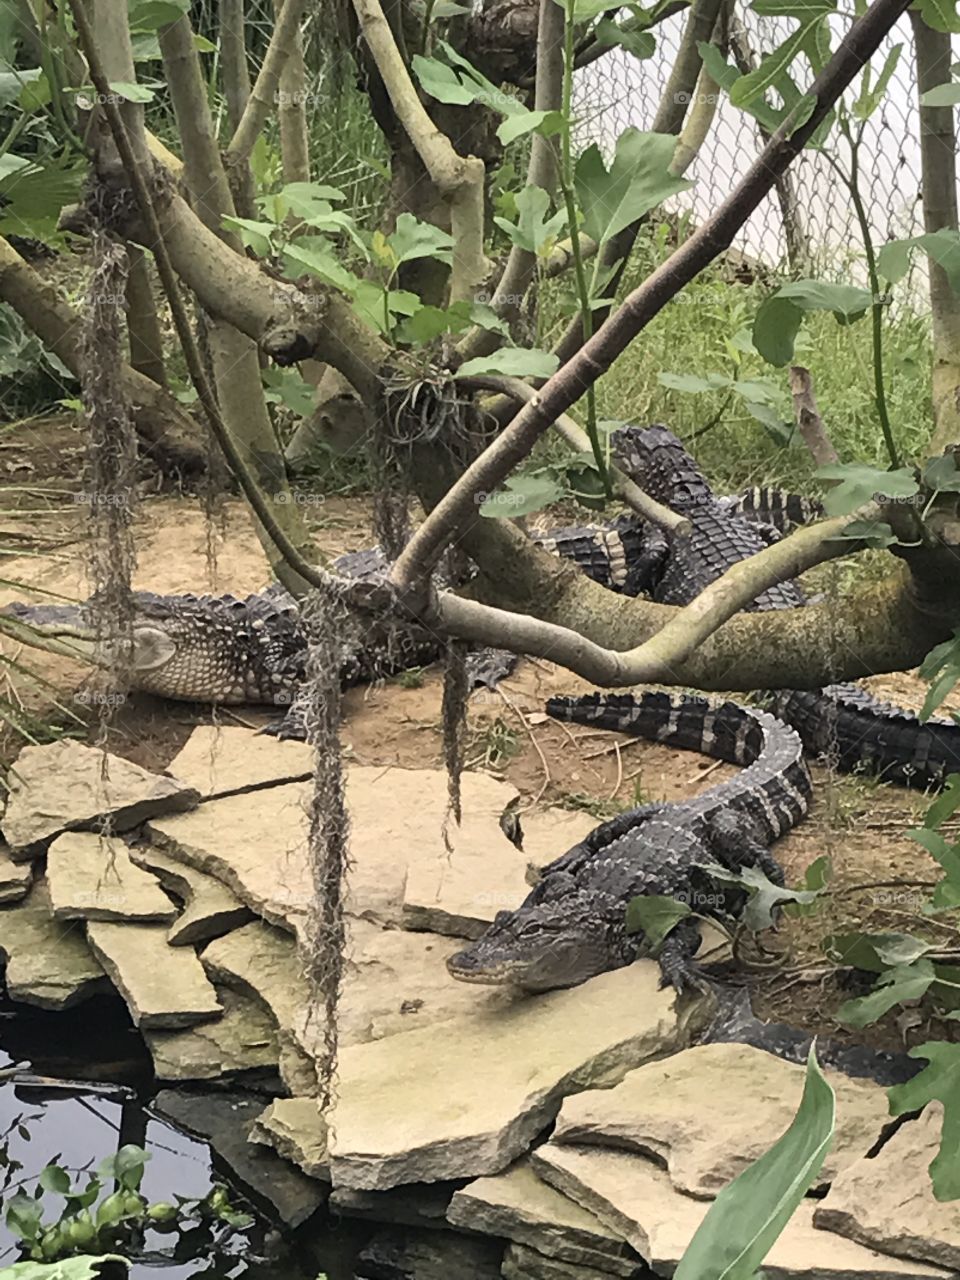 Delaware alligators 3 palms zoo